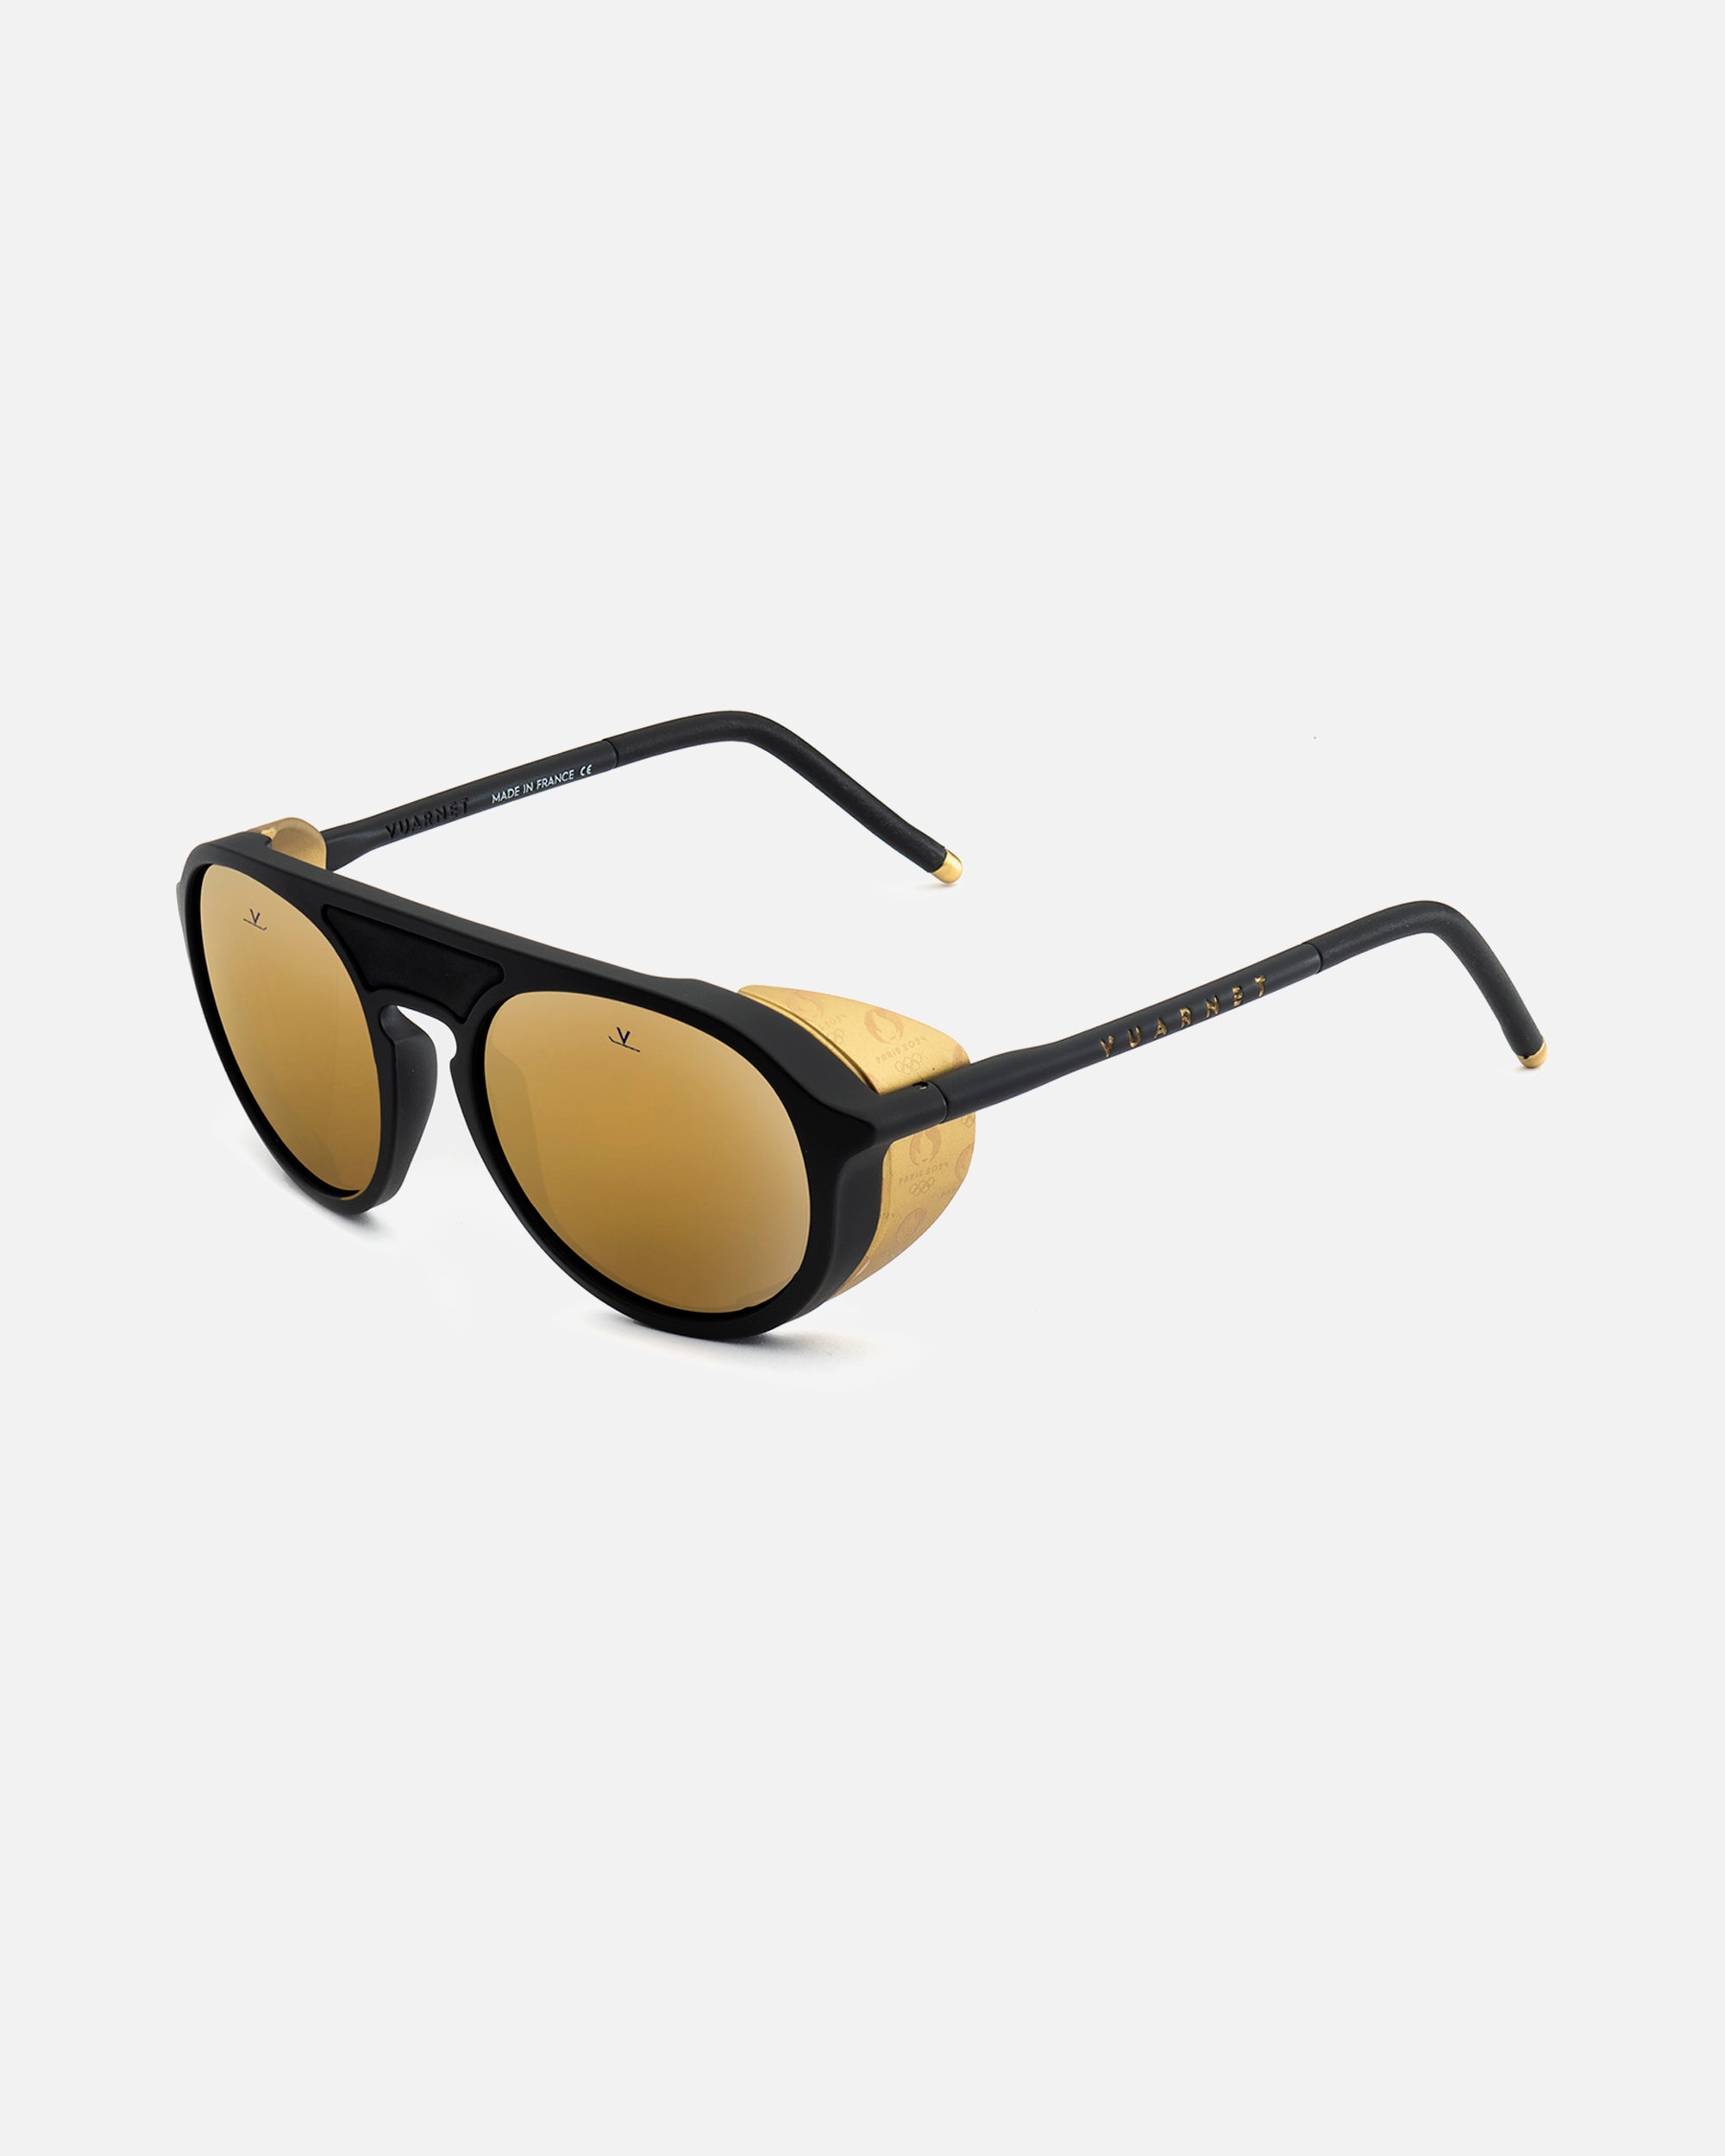 Vuarnet Designer Sunglasses VL1014-0001 Black Frame with Brown Tint/Silver  Mirro - Speert International